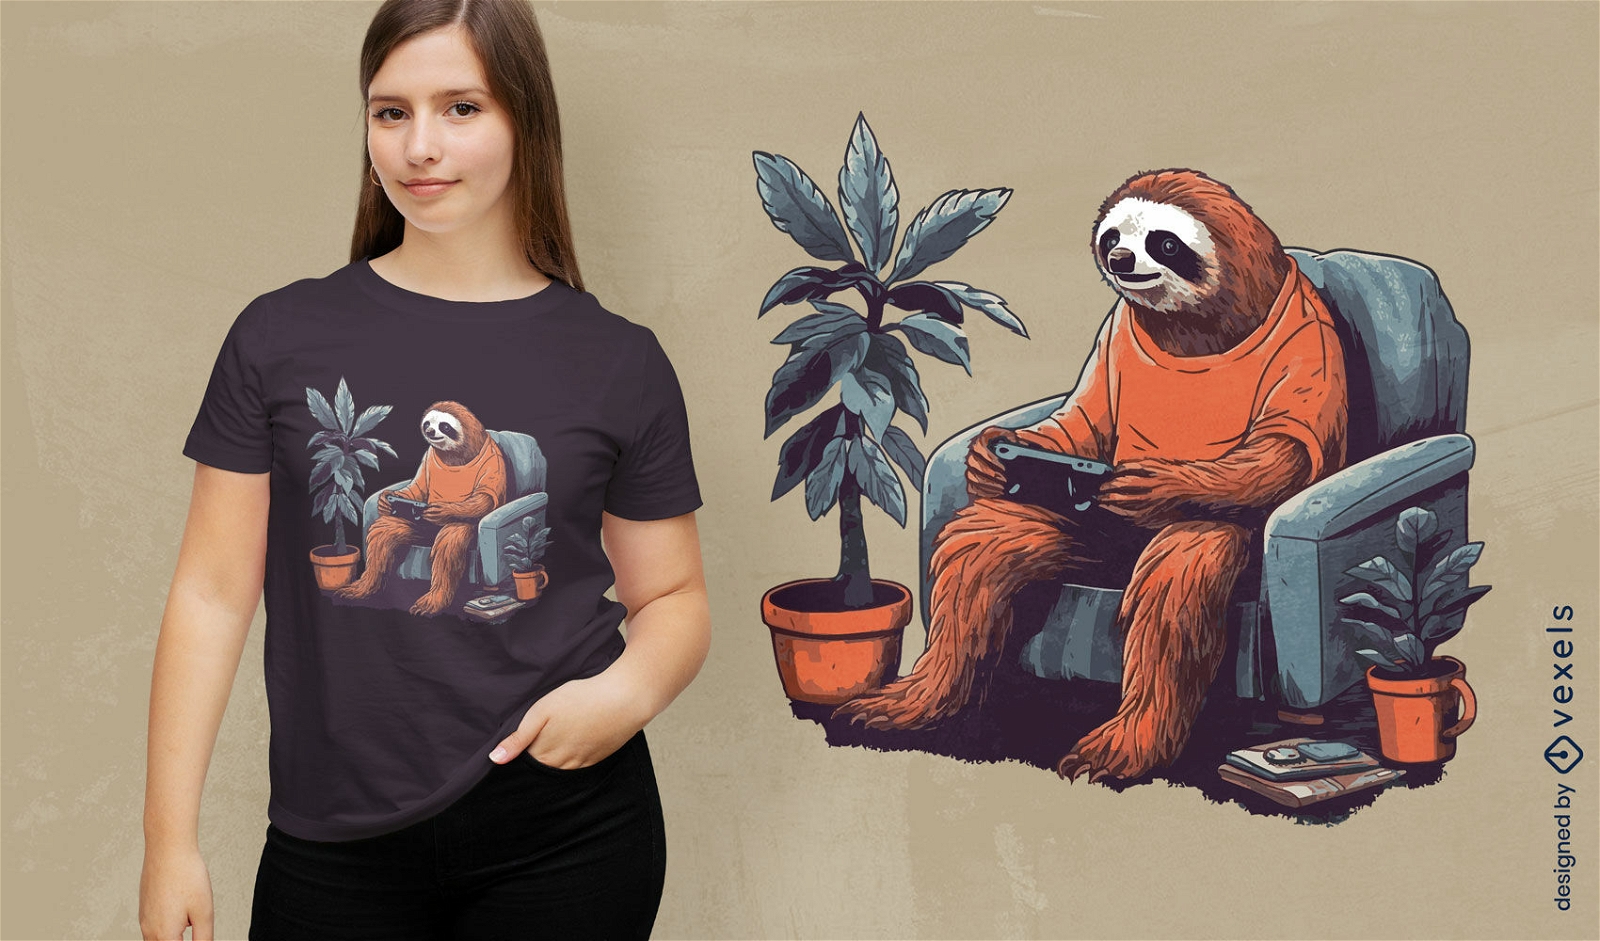 Sloth playing videogames t-shirt design